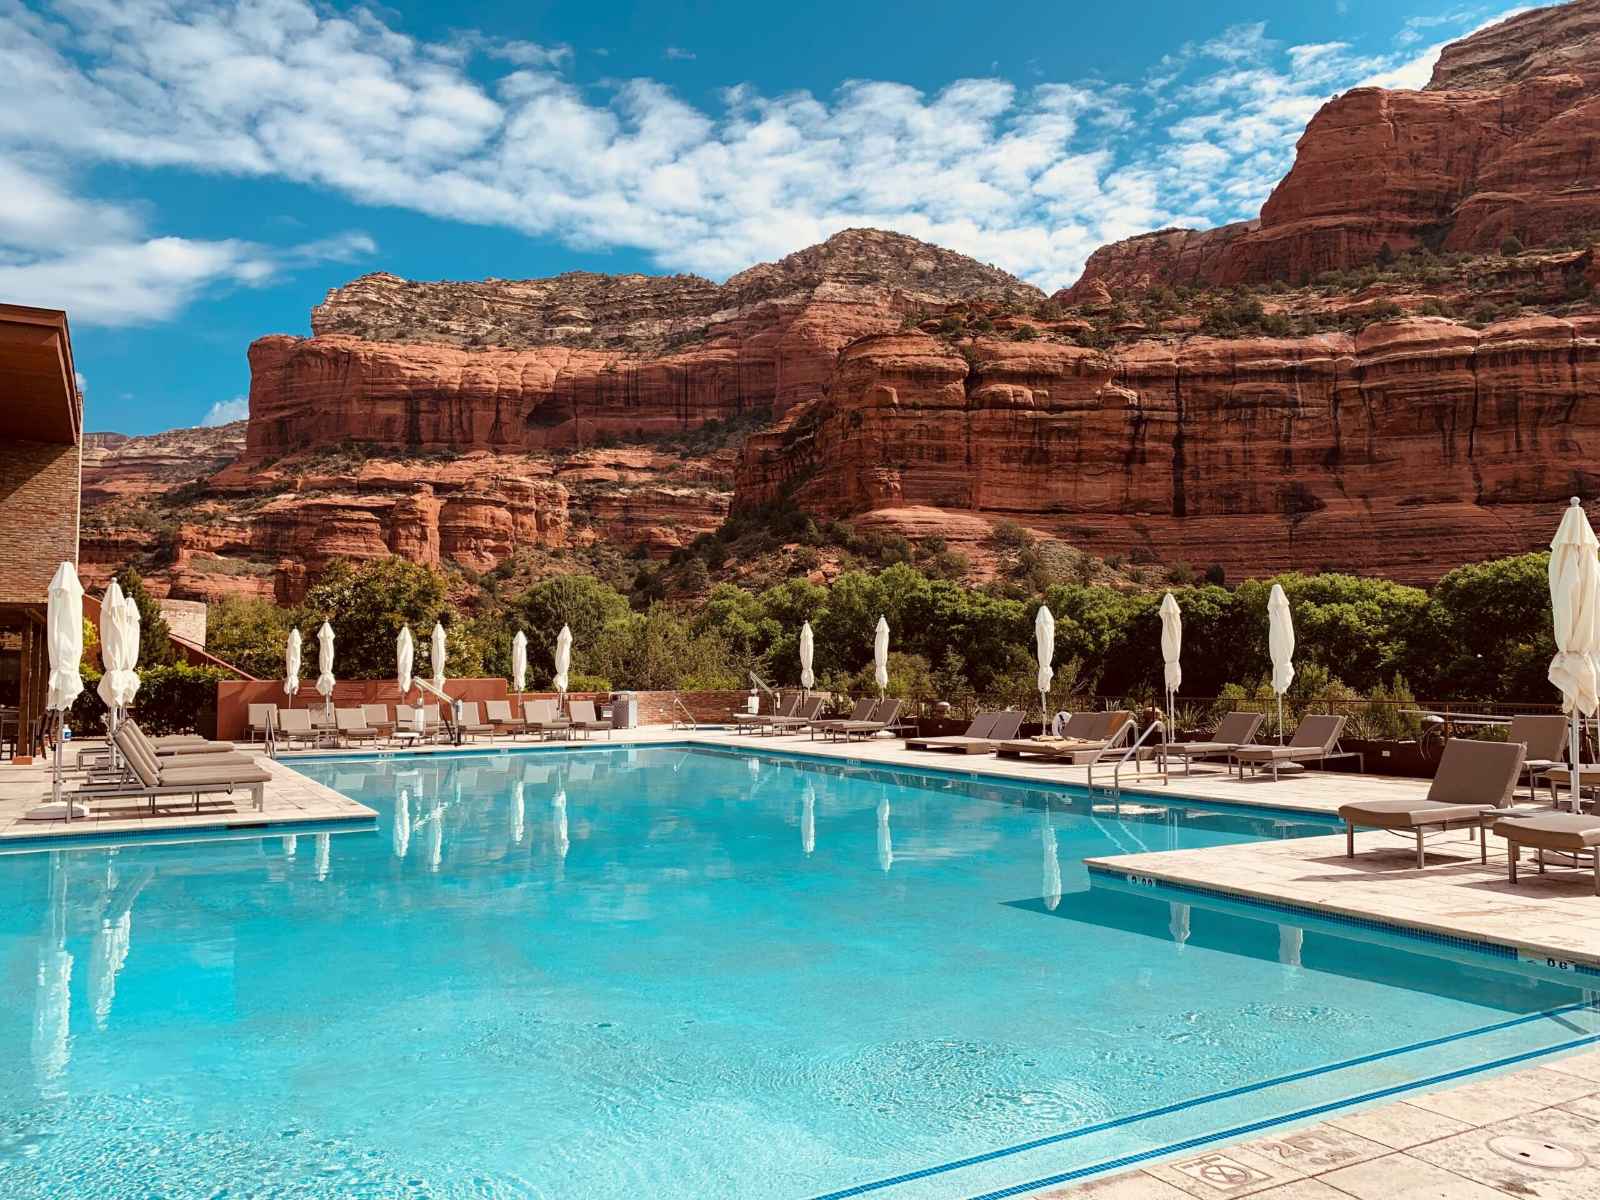 Best Hotels in Sedona Enchantment Resort